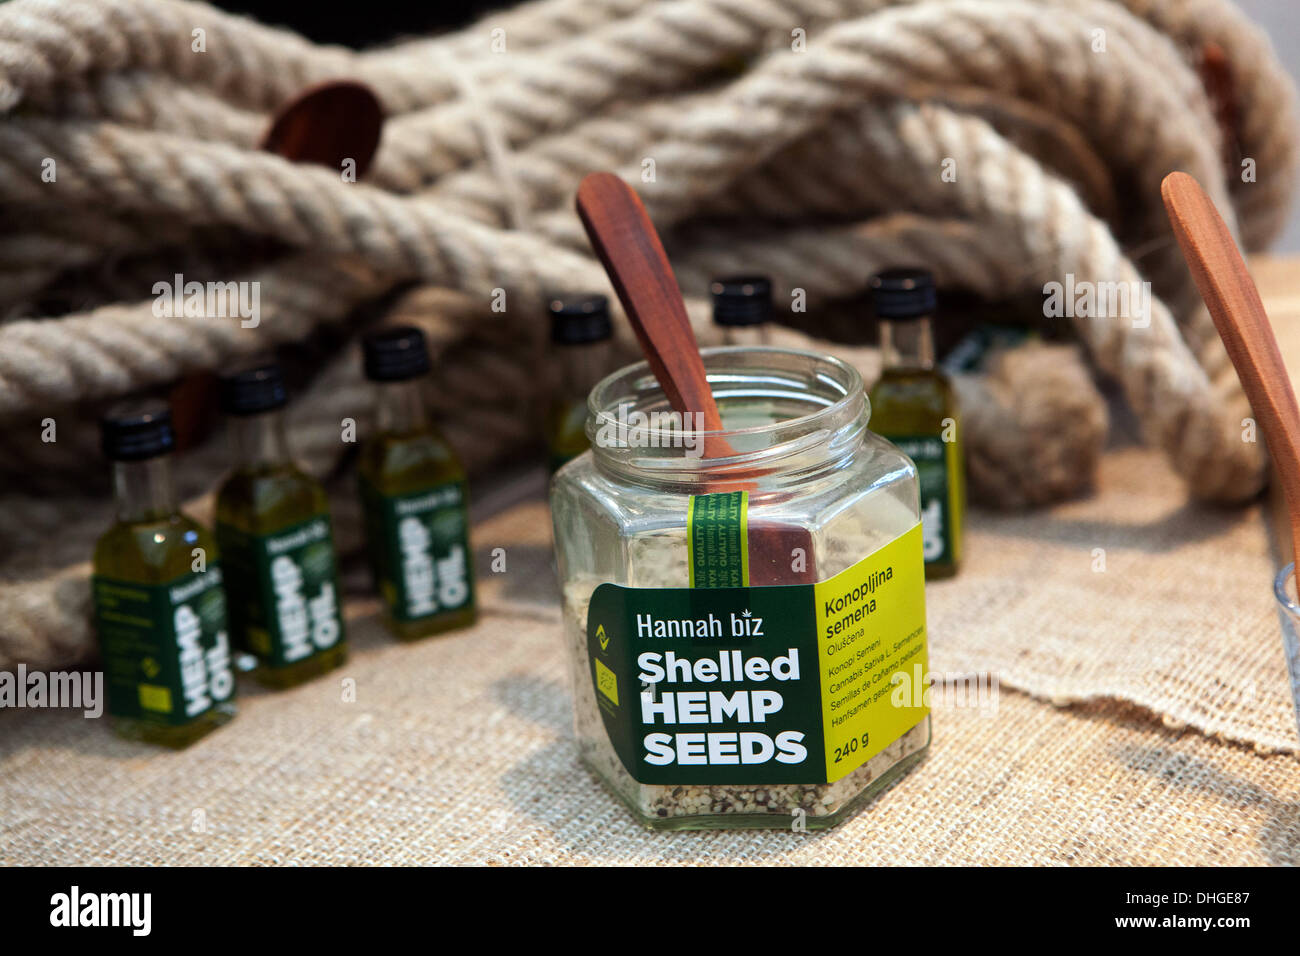 Hemp product, shelled seeds Stock Photo